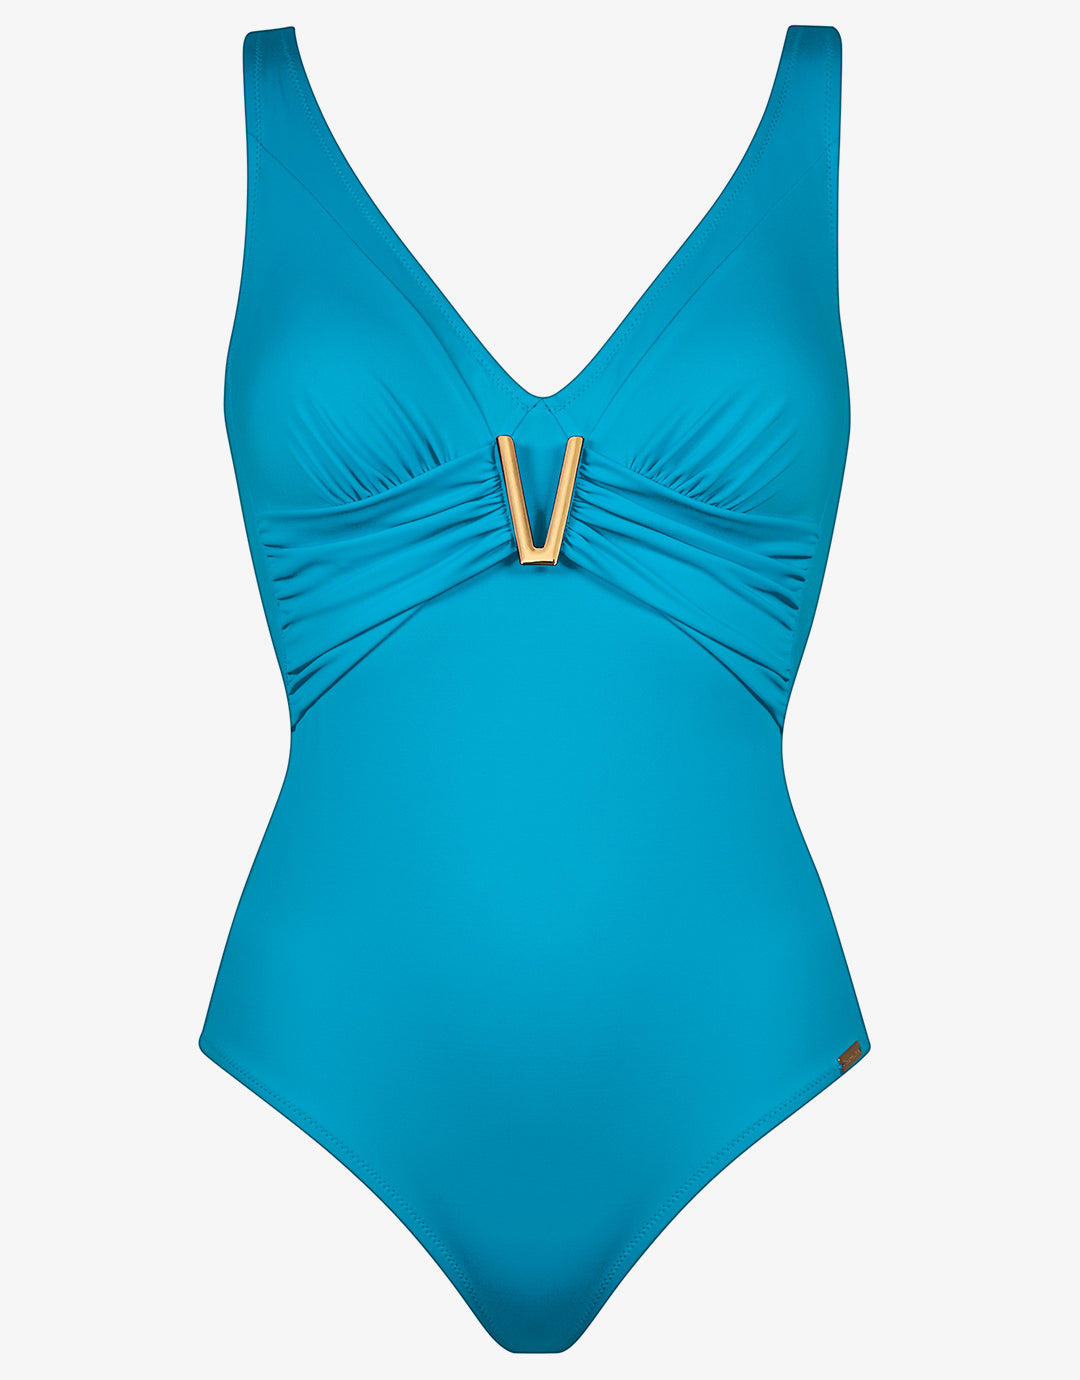 Uni Swimsuit - Aqua - Simply Beach UK